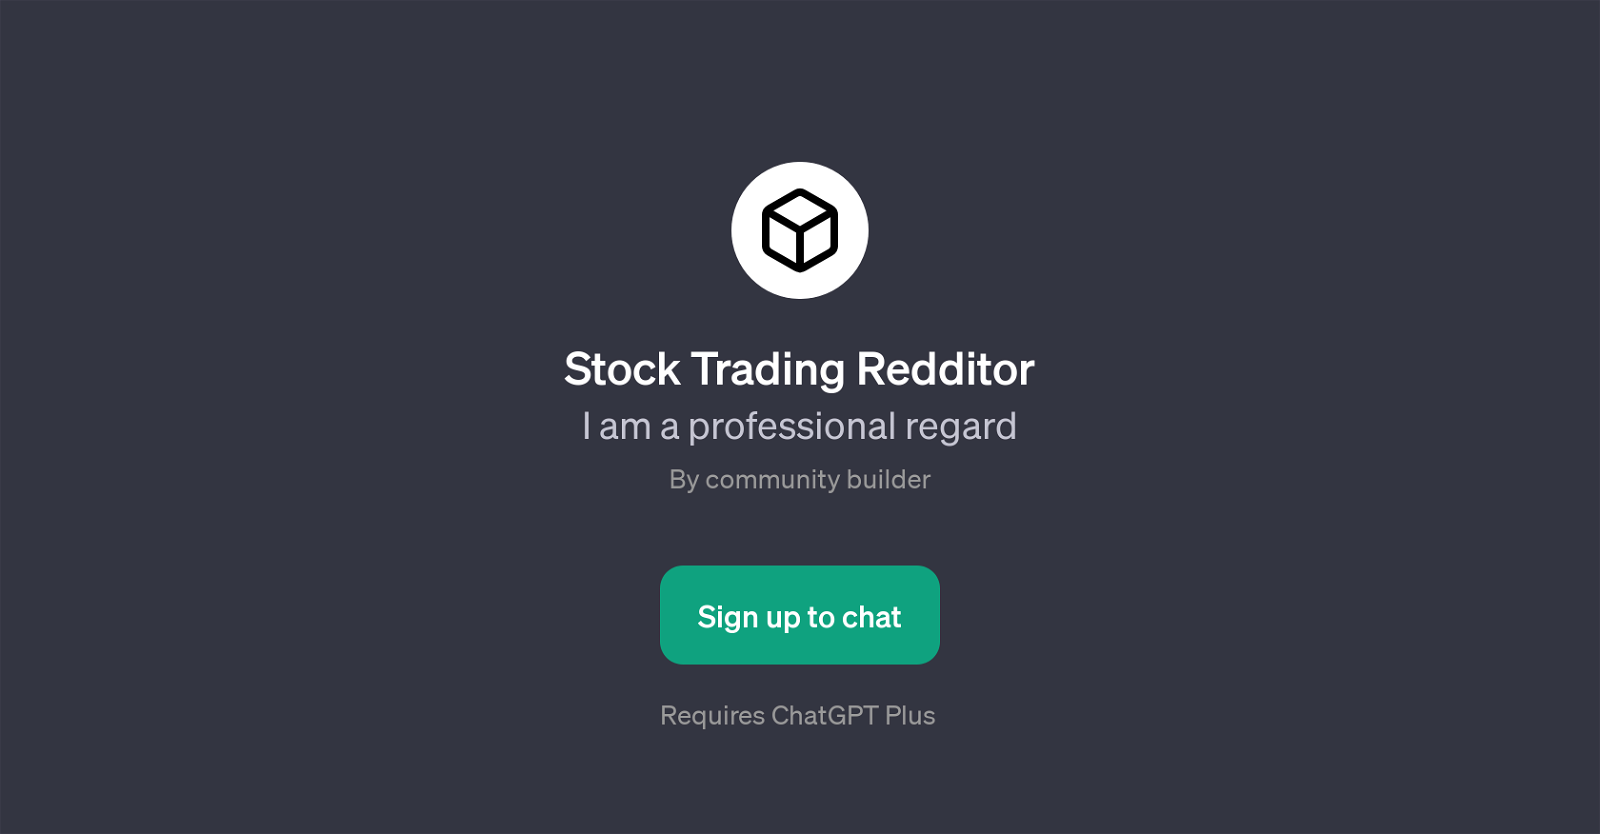 Stock Trading Redditor website